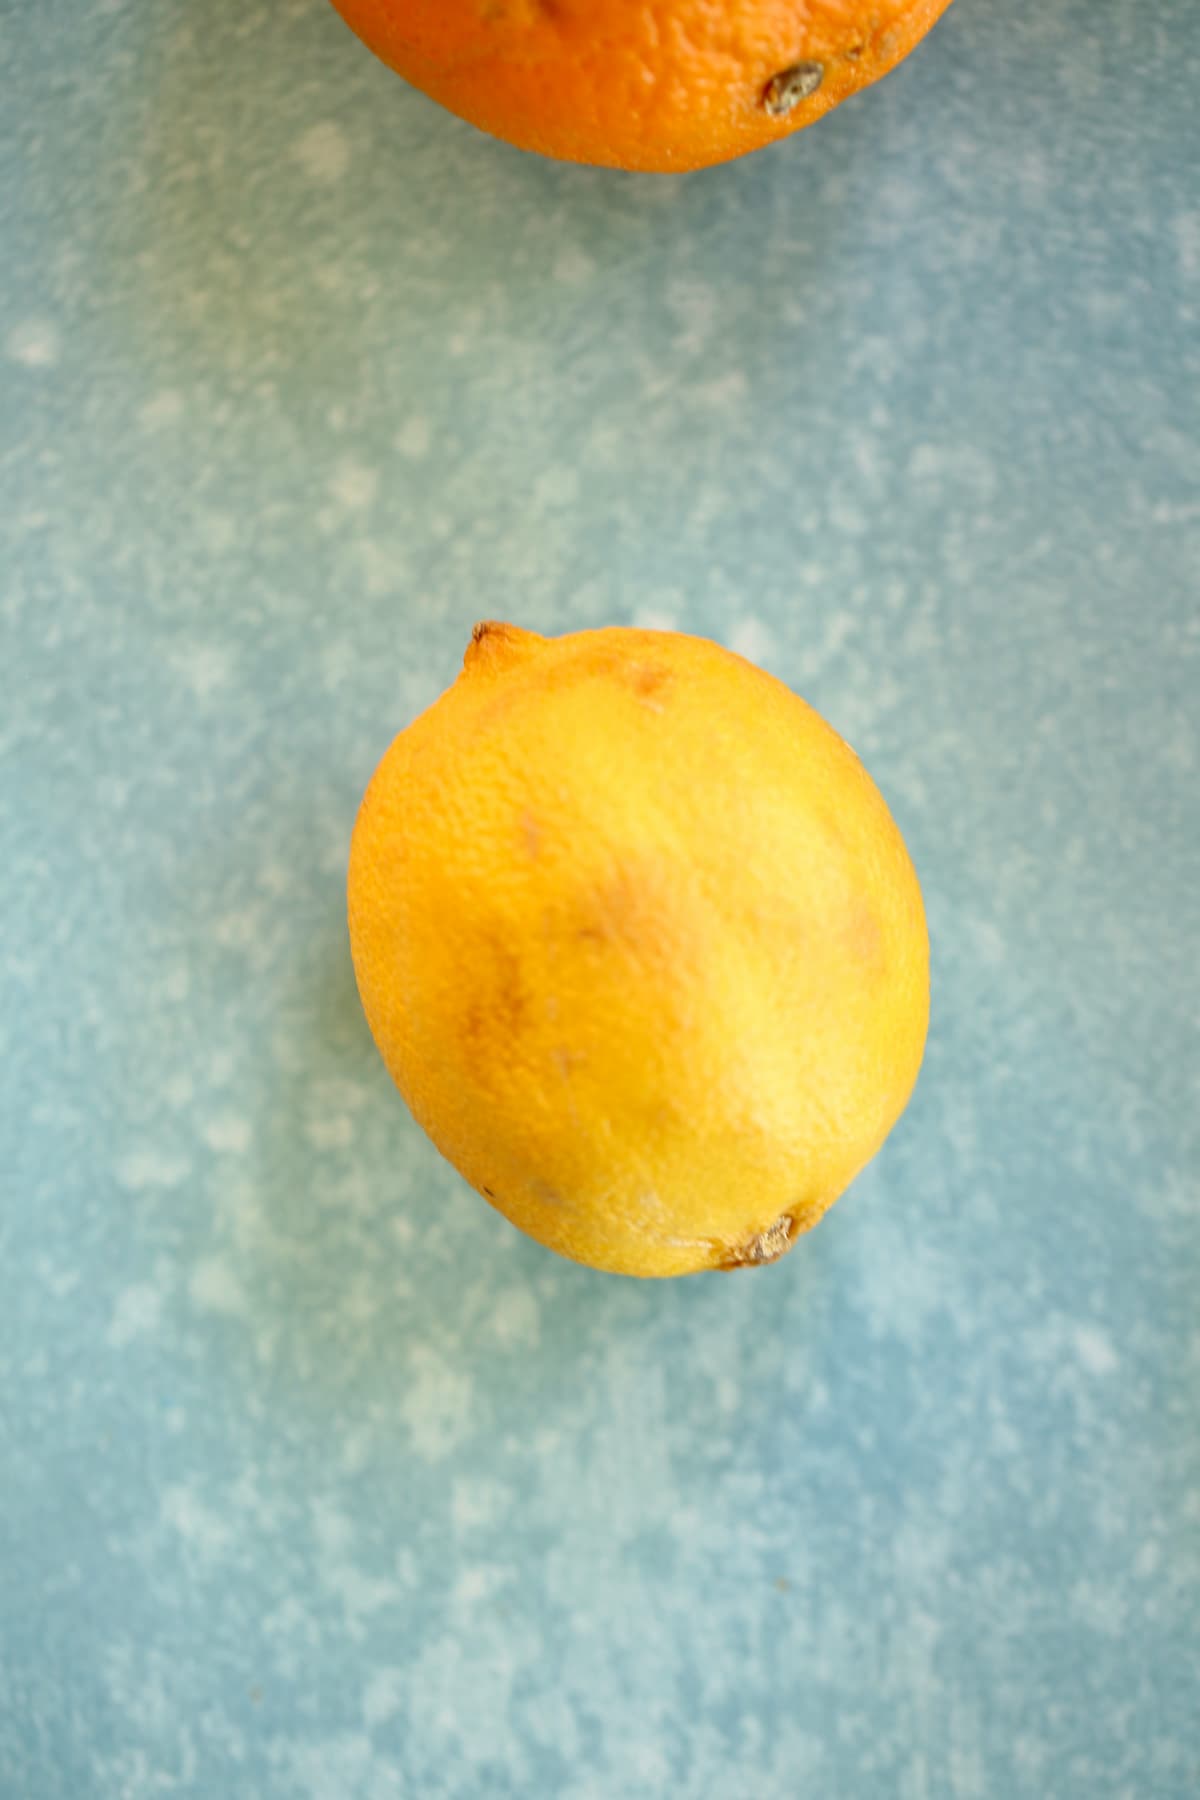 an old dry lemon on a blue table.